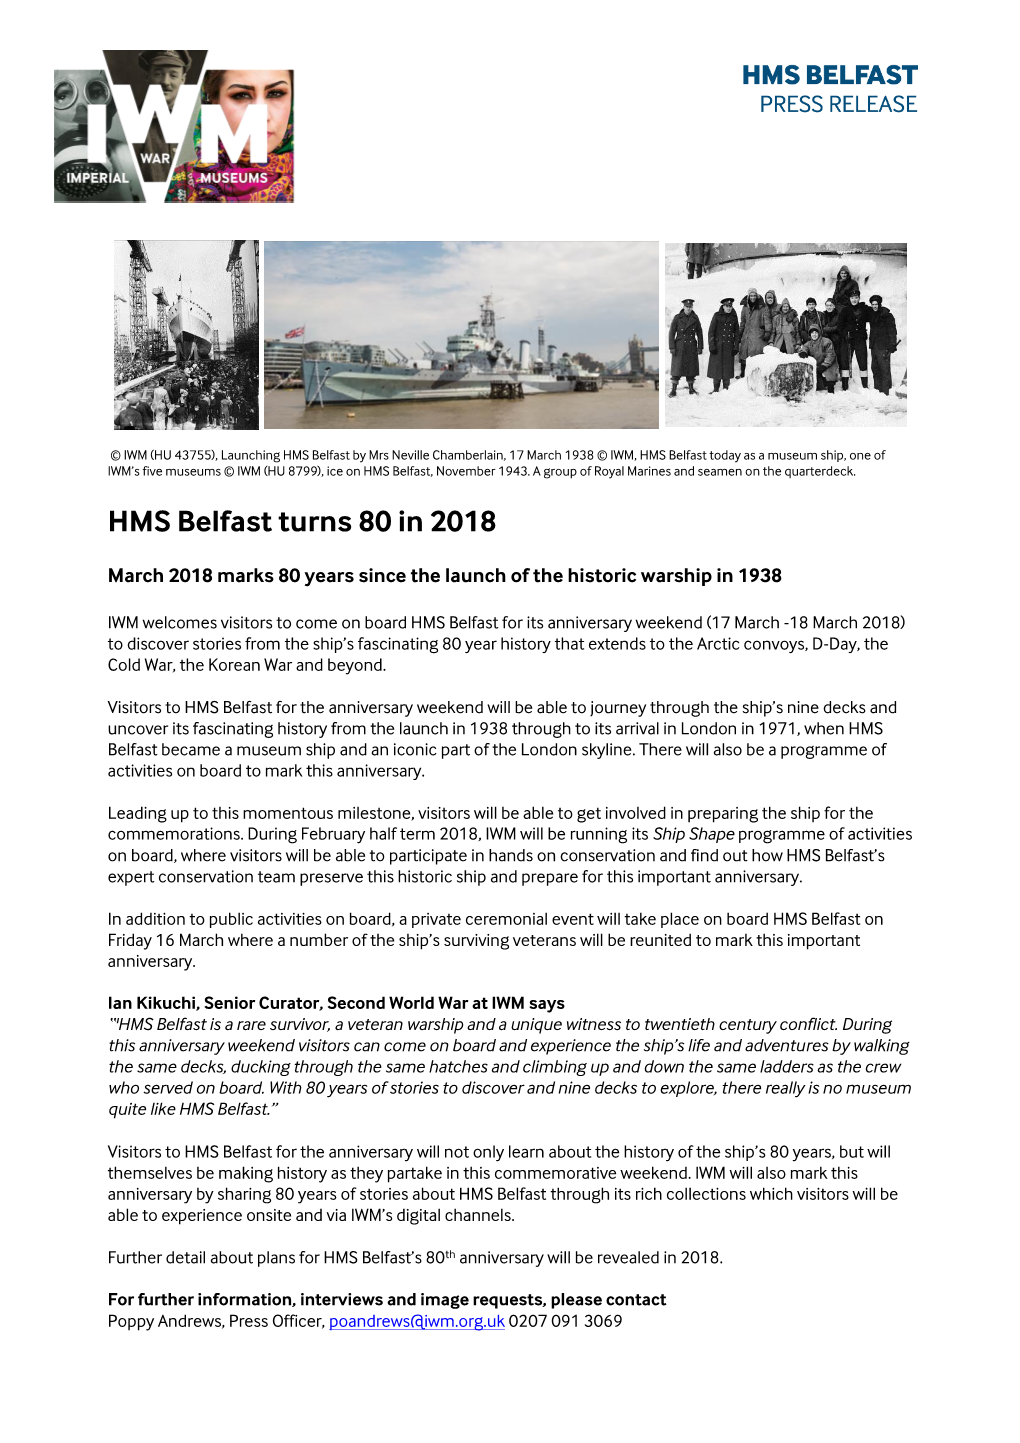 HMS Belfast Turns 80 in 2018